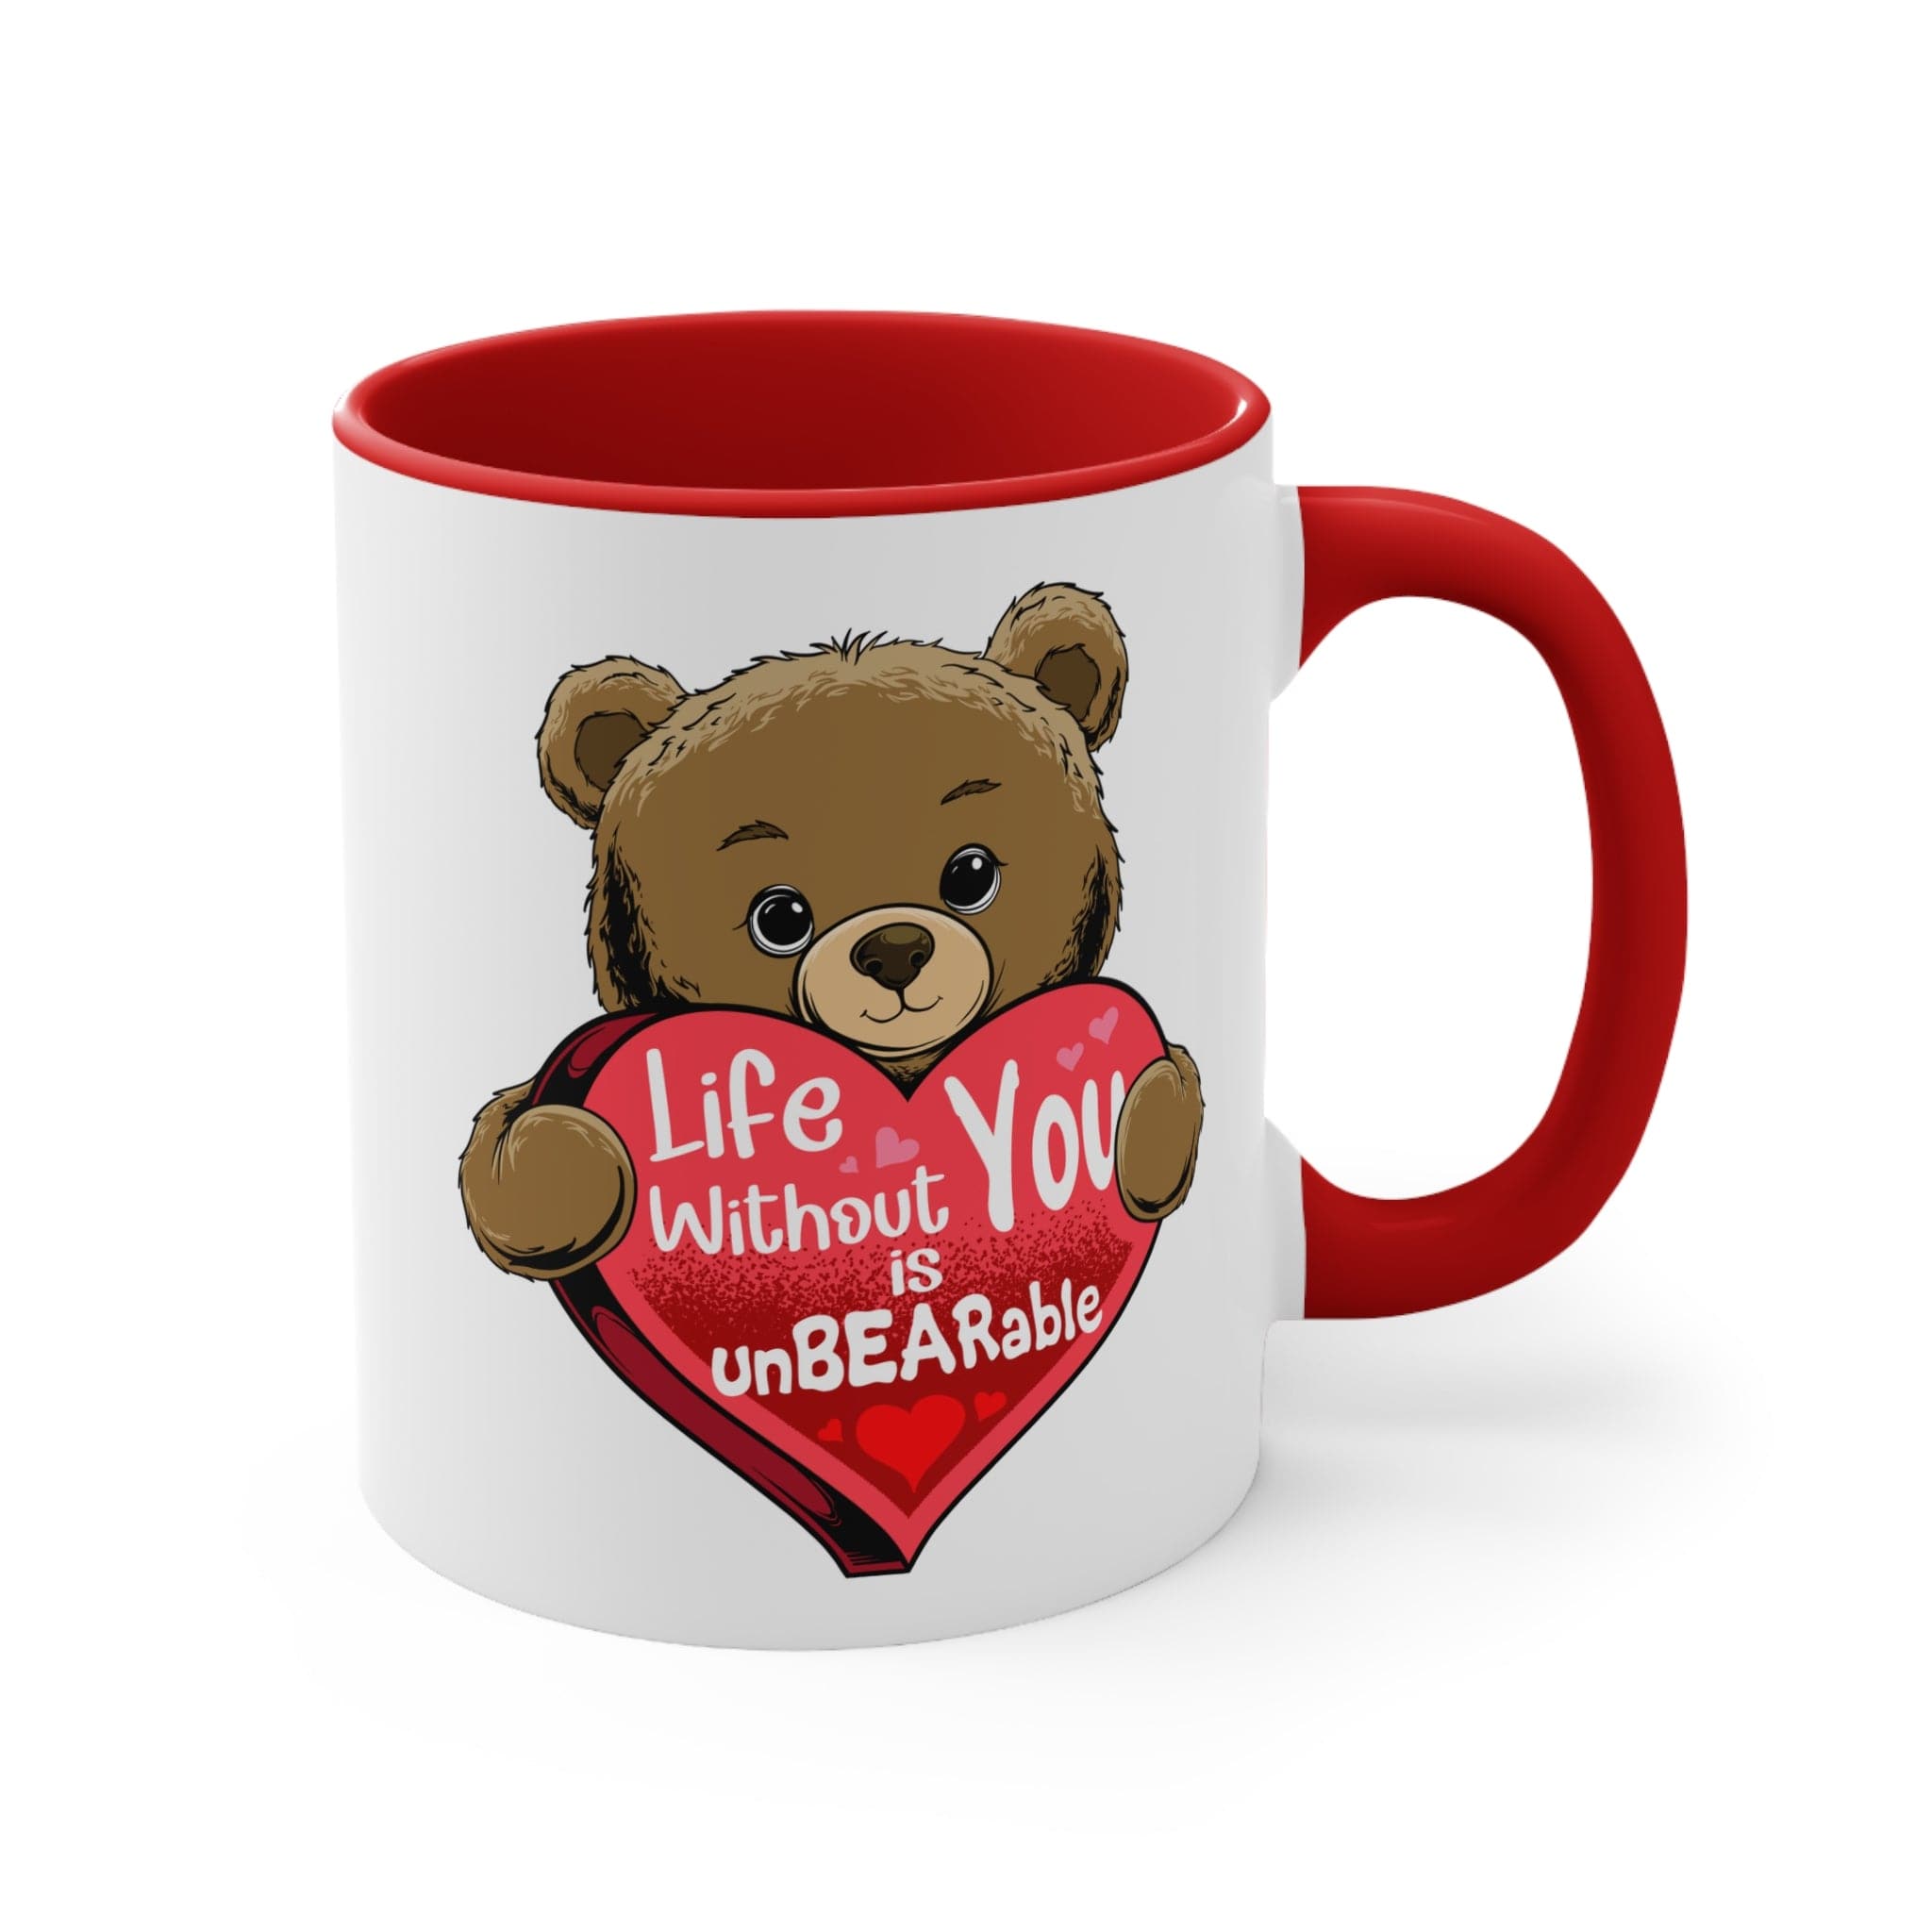 Life Without you is unbearable Mug